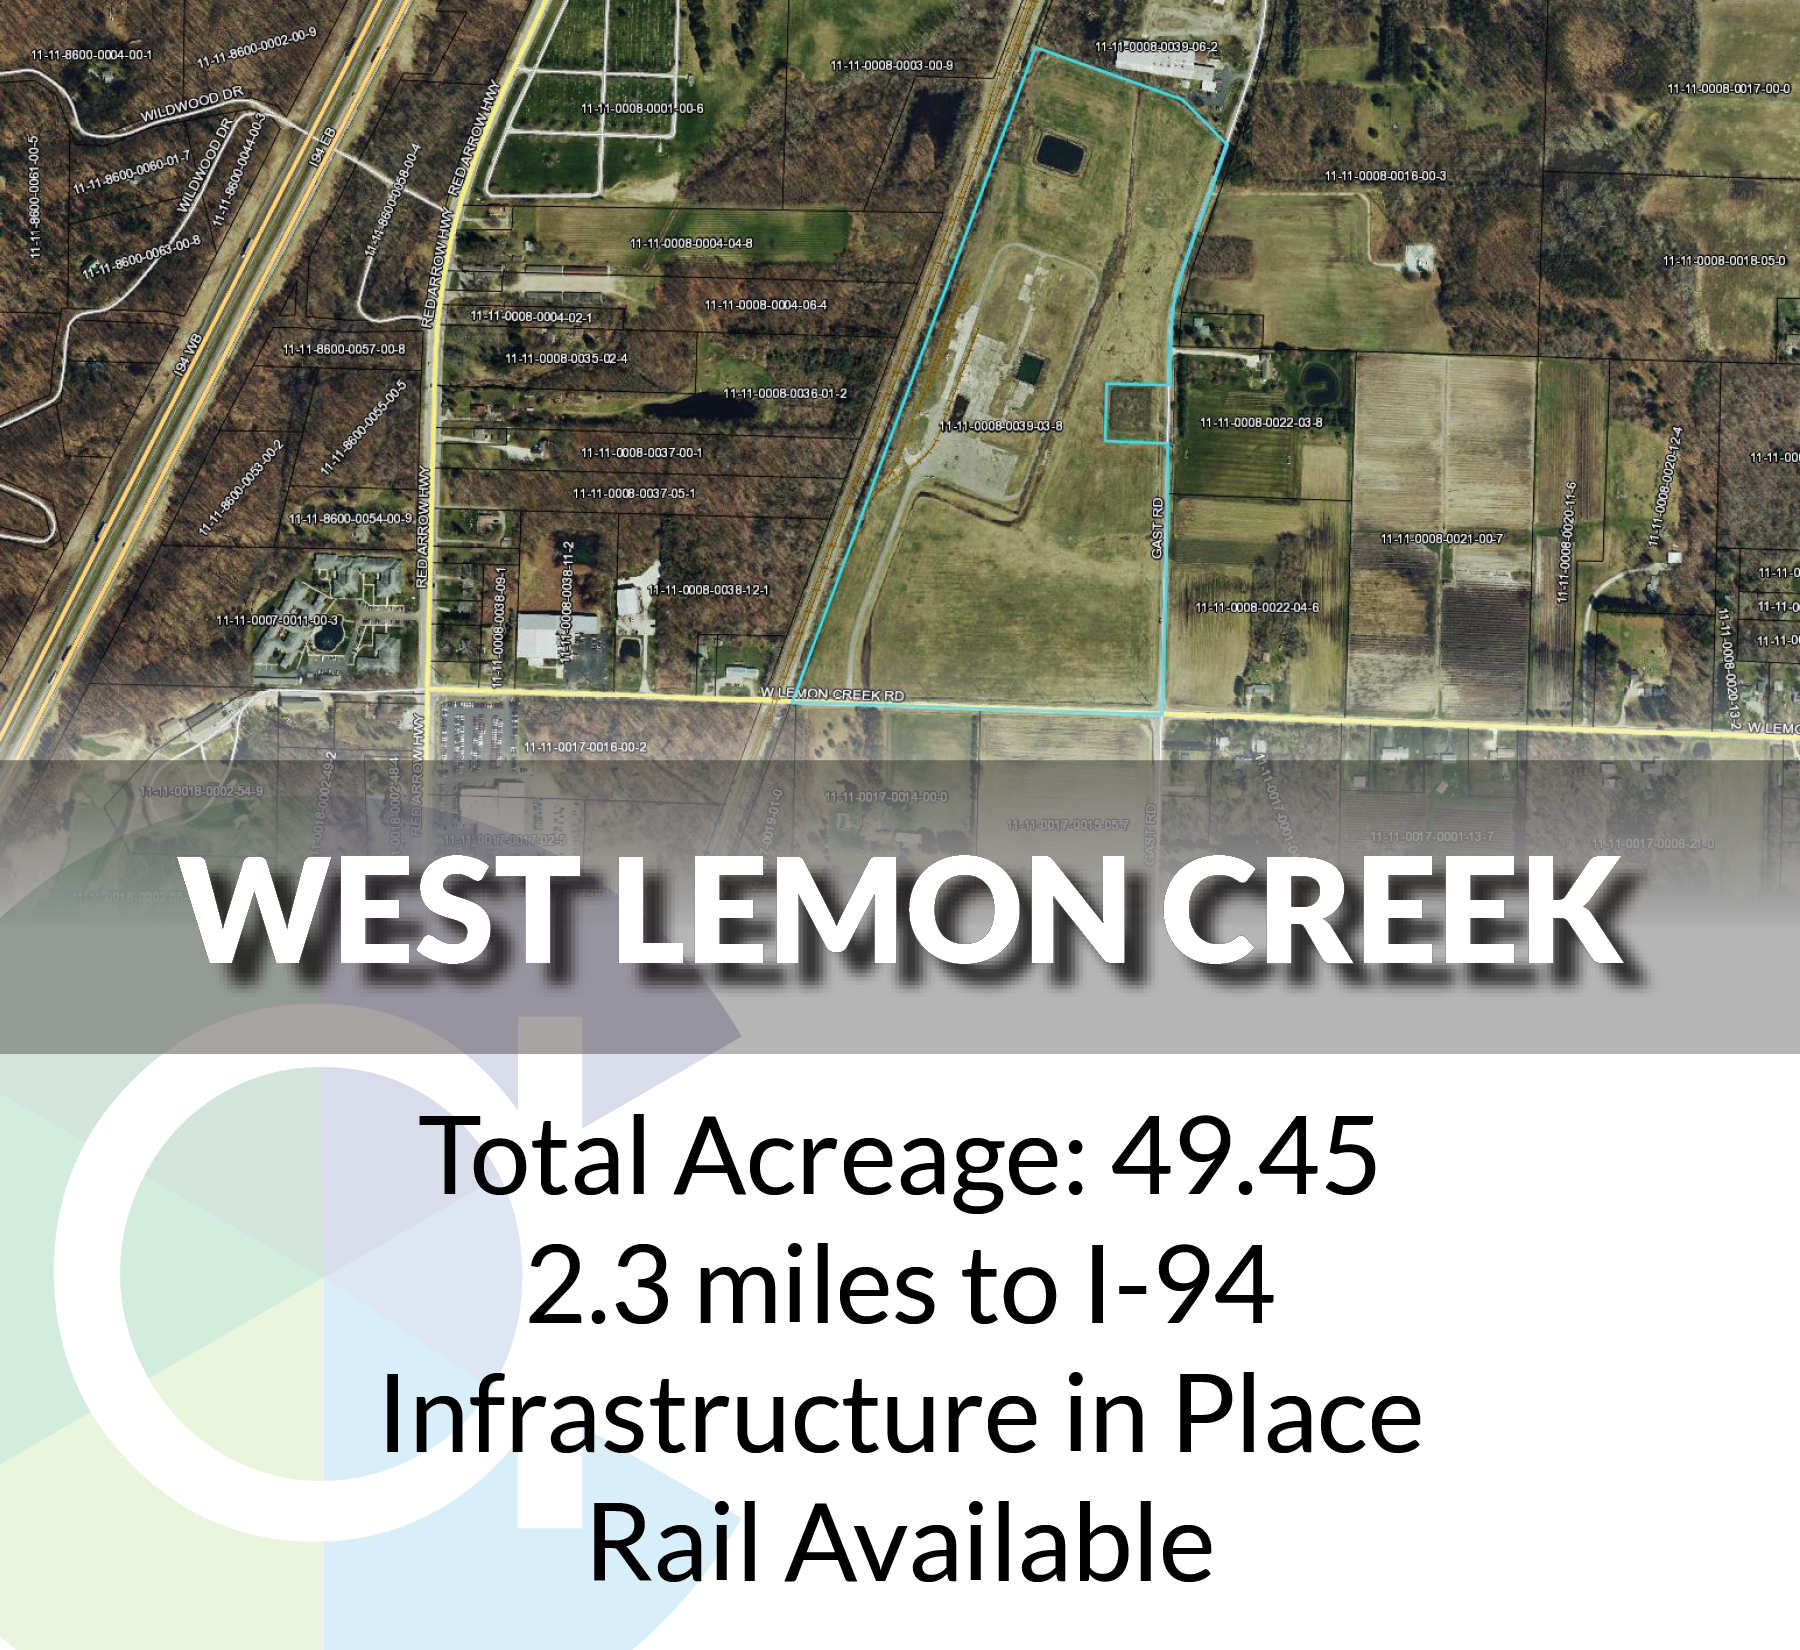 West Lemon Creek